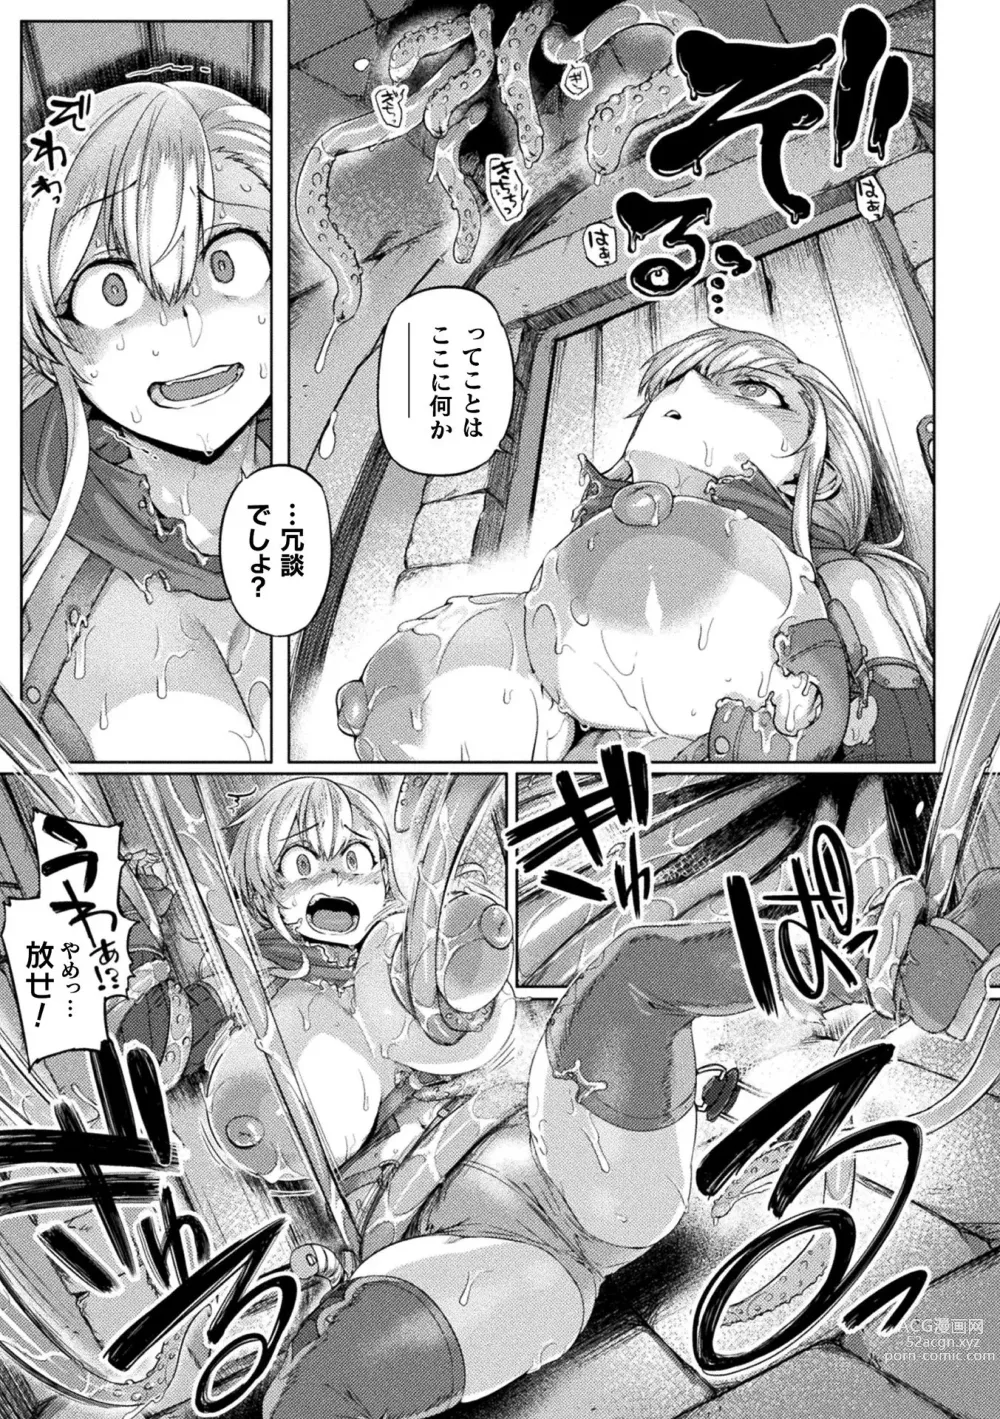 Page 13 of manga Kusshita Otome ga Ochiru Koro - When a surrendered maiden becomes sexually degraded